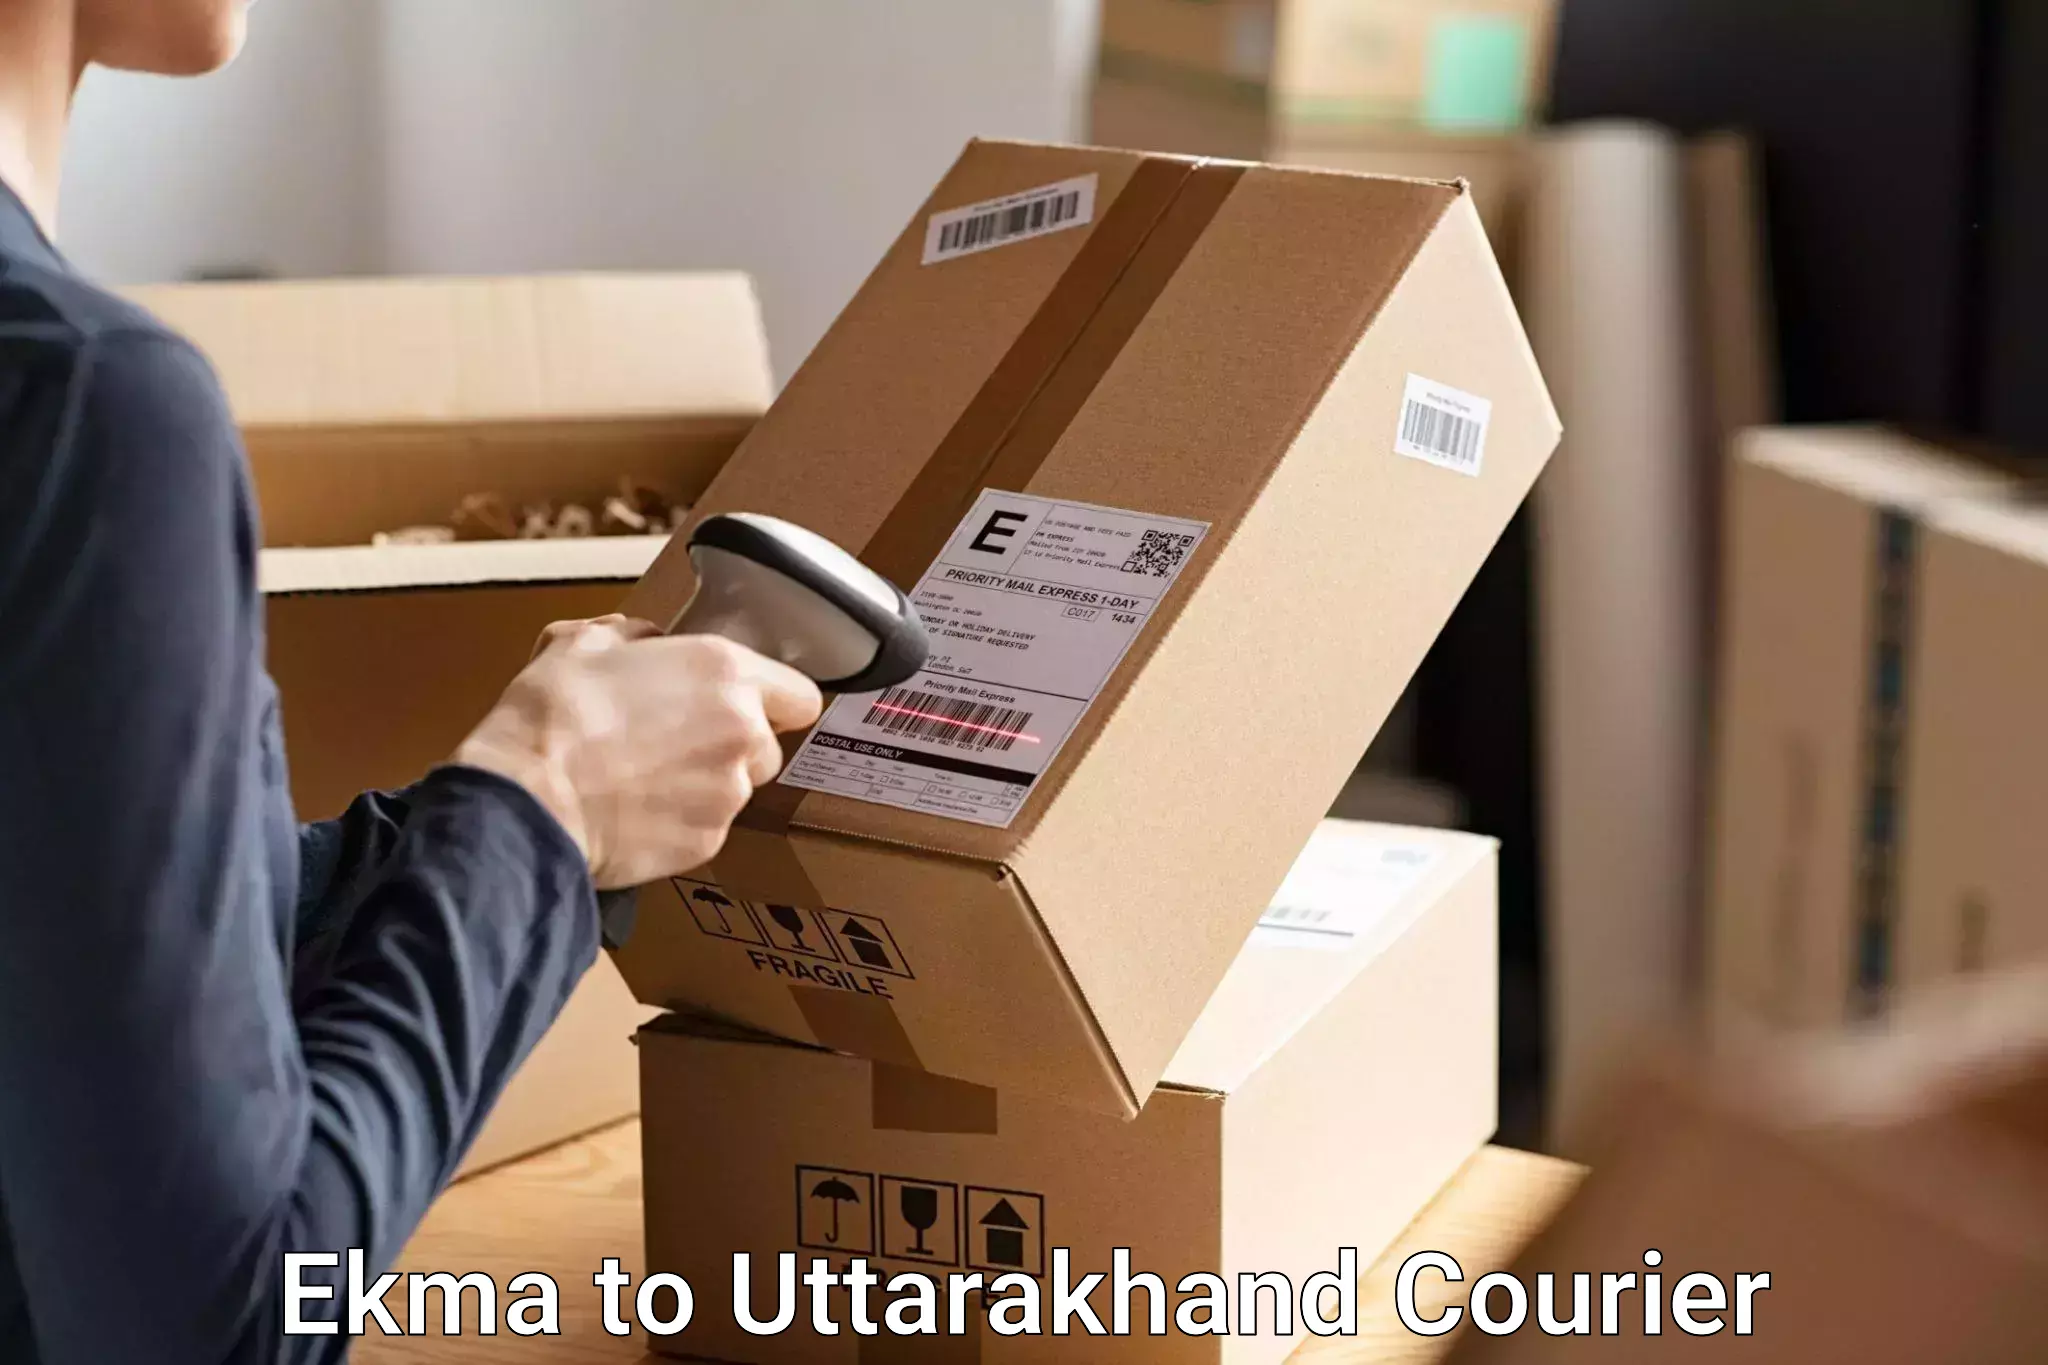 Baggage transport network Ekma to Uttarakhand